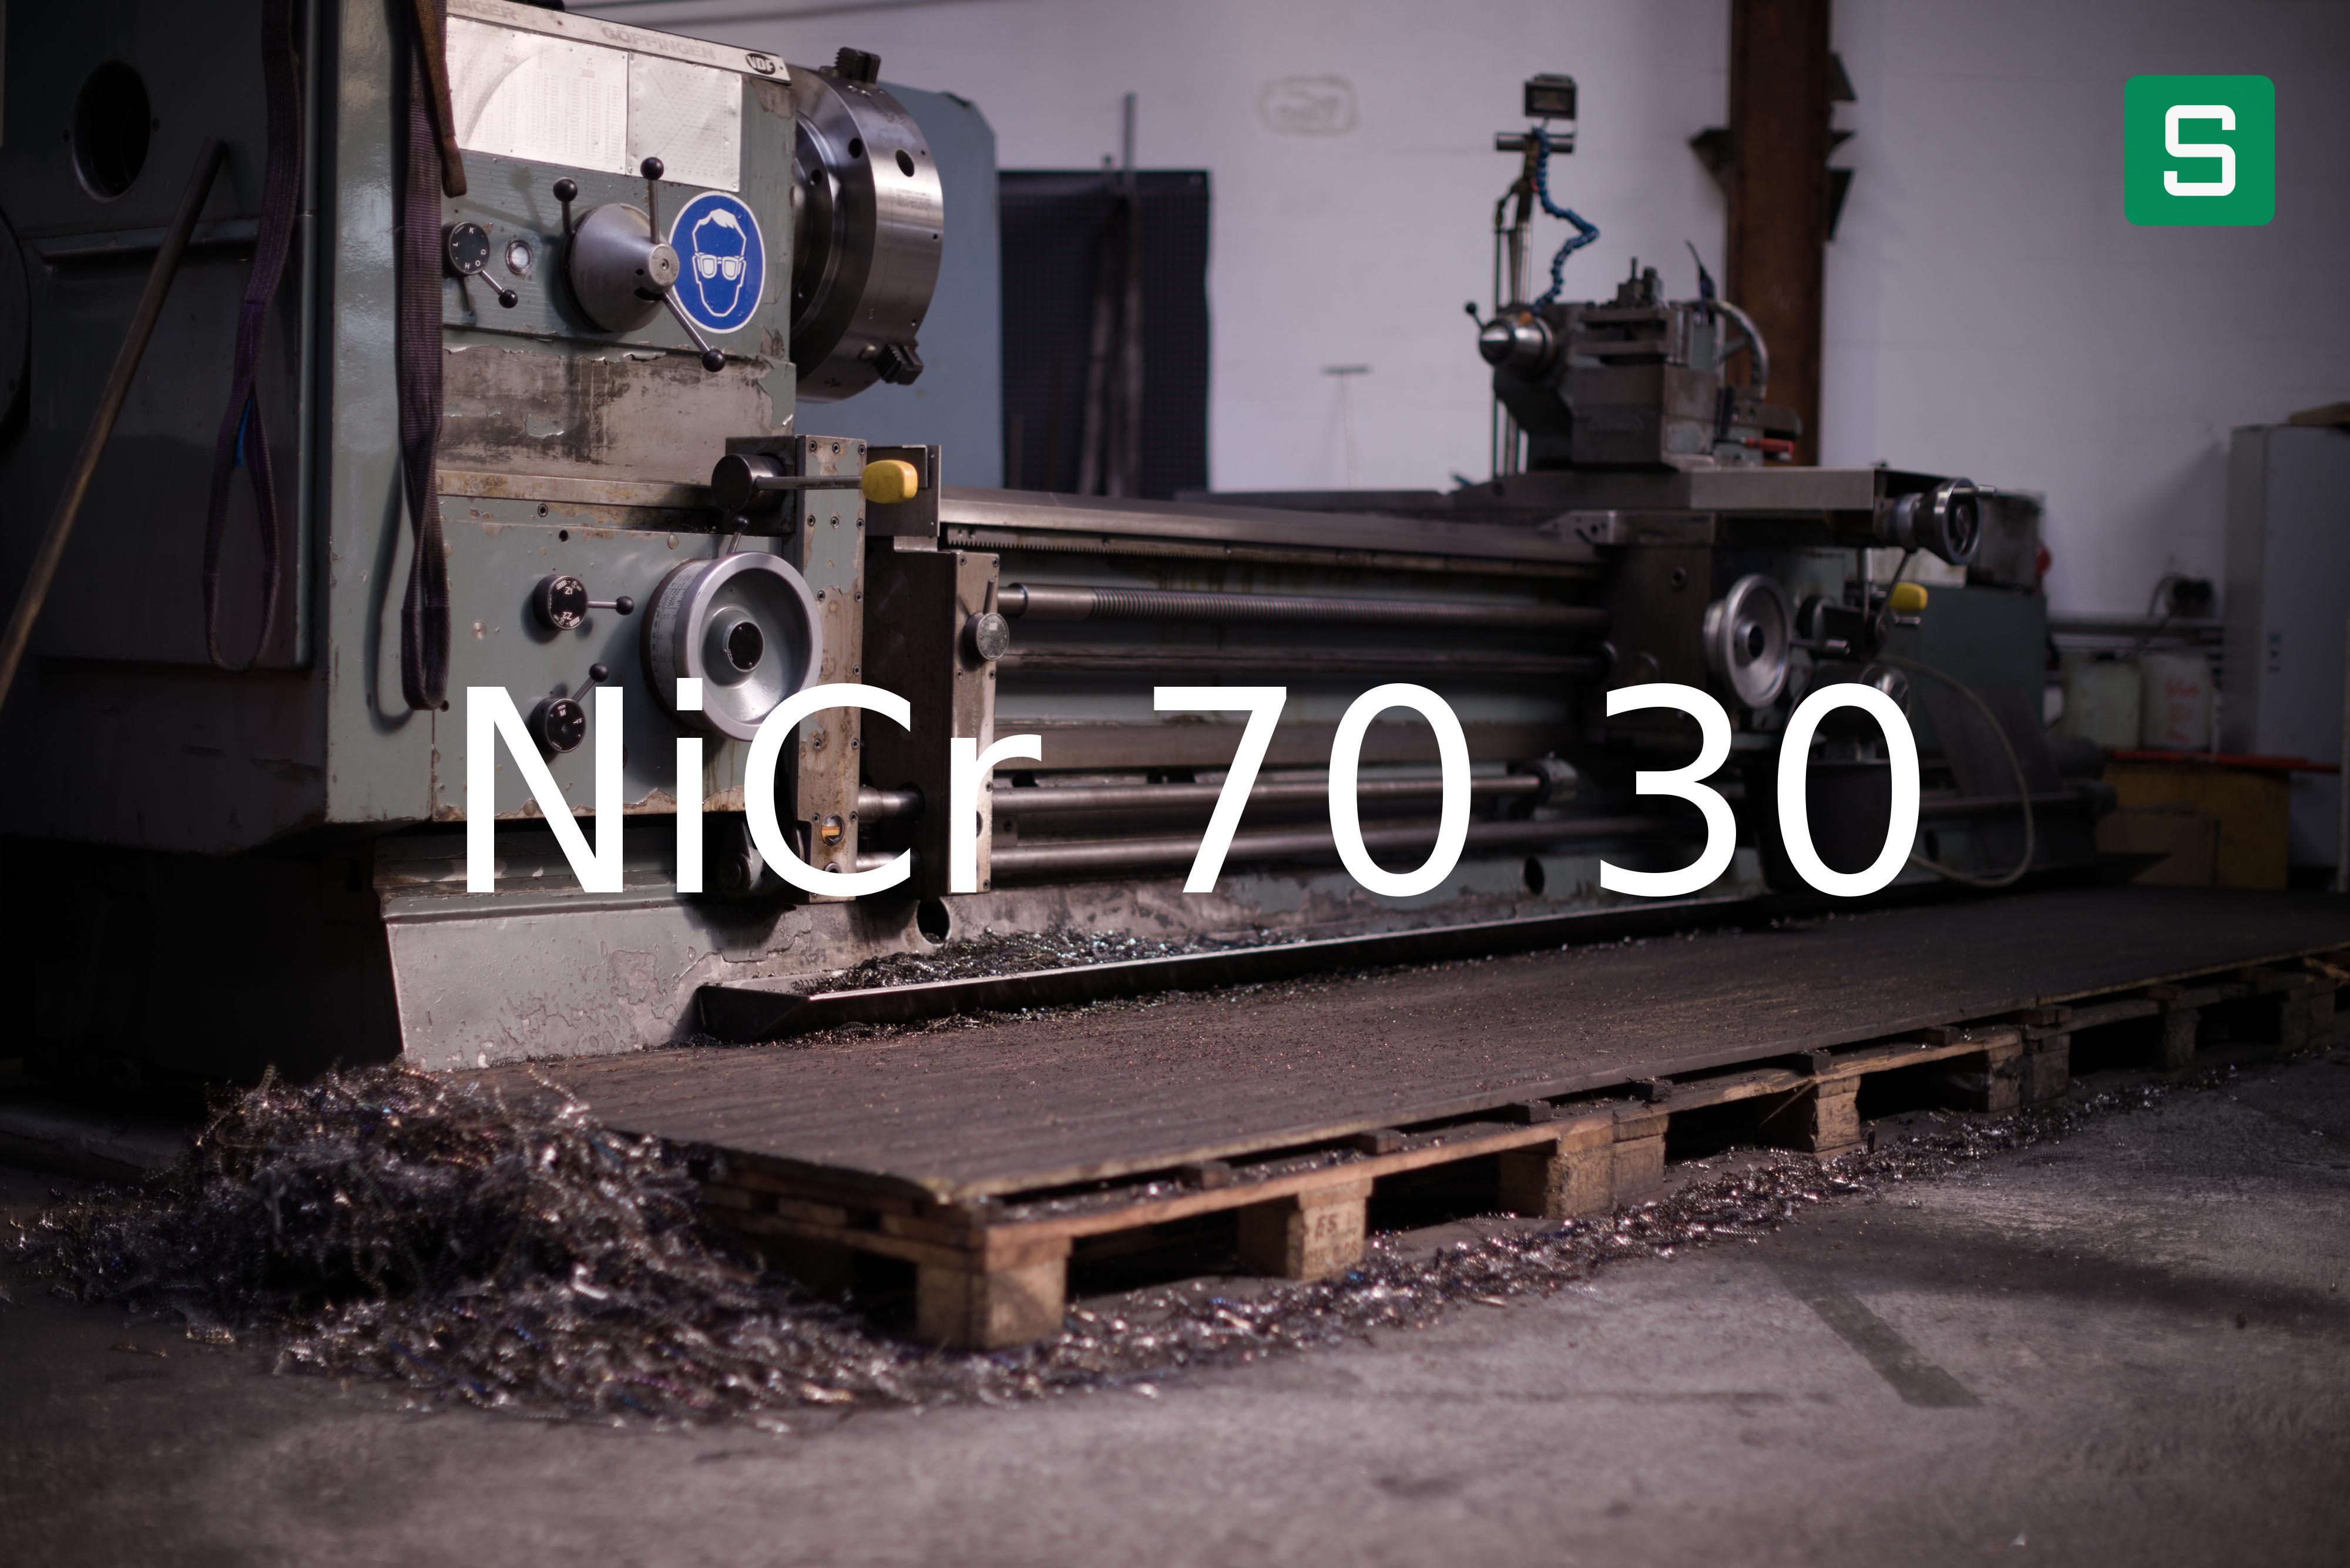 Steel Material: NiCr 70 30